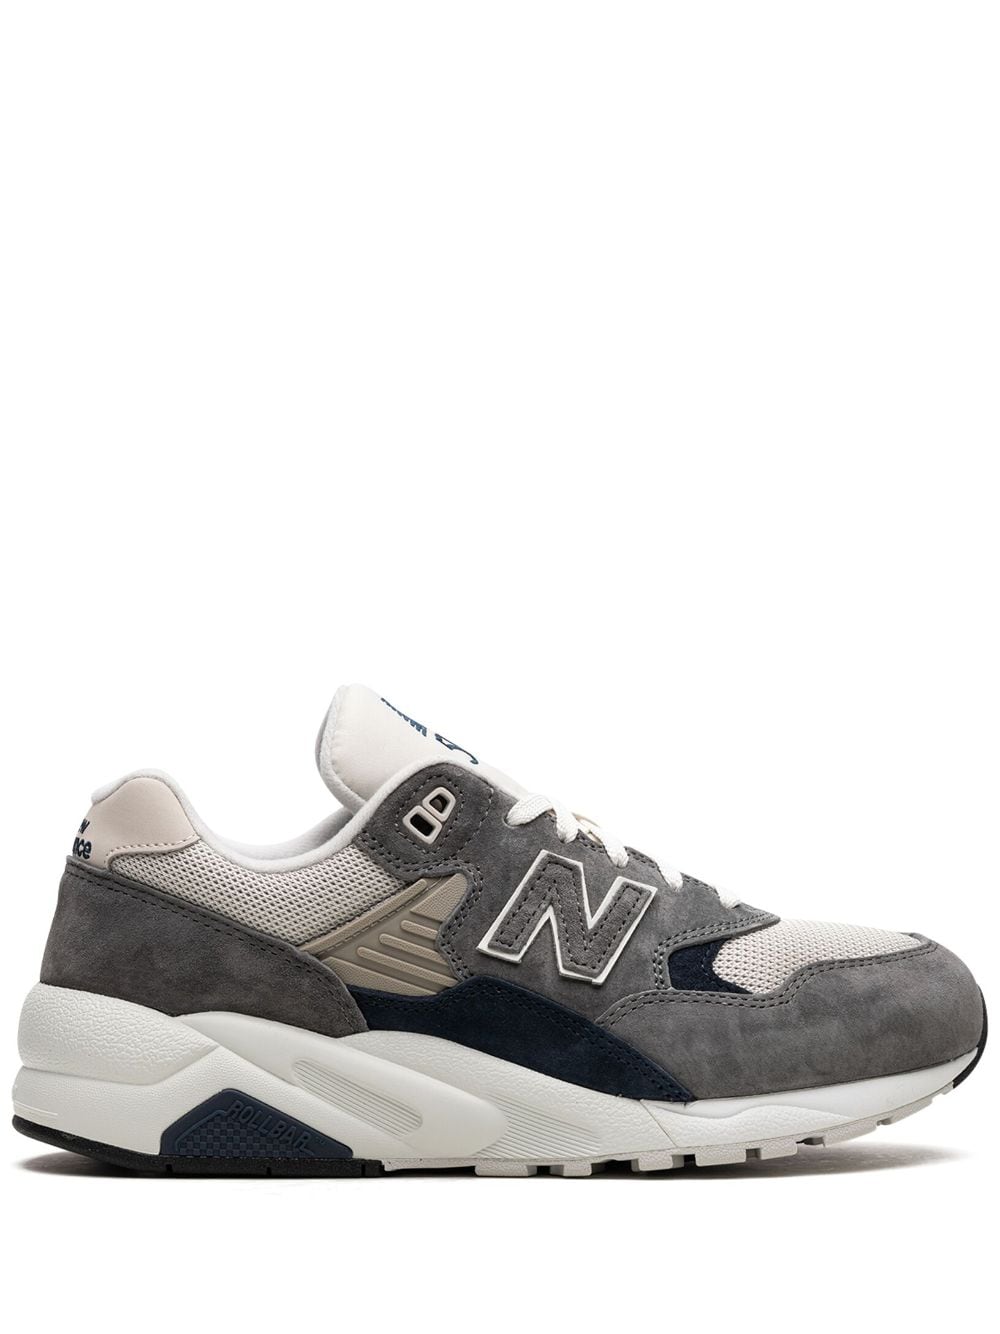 New Balance 580 "Castlerock" sneakers - Grey